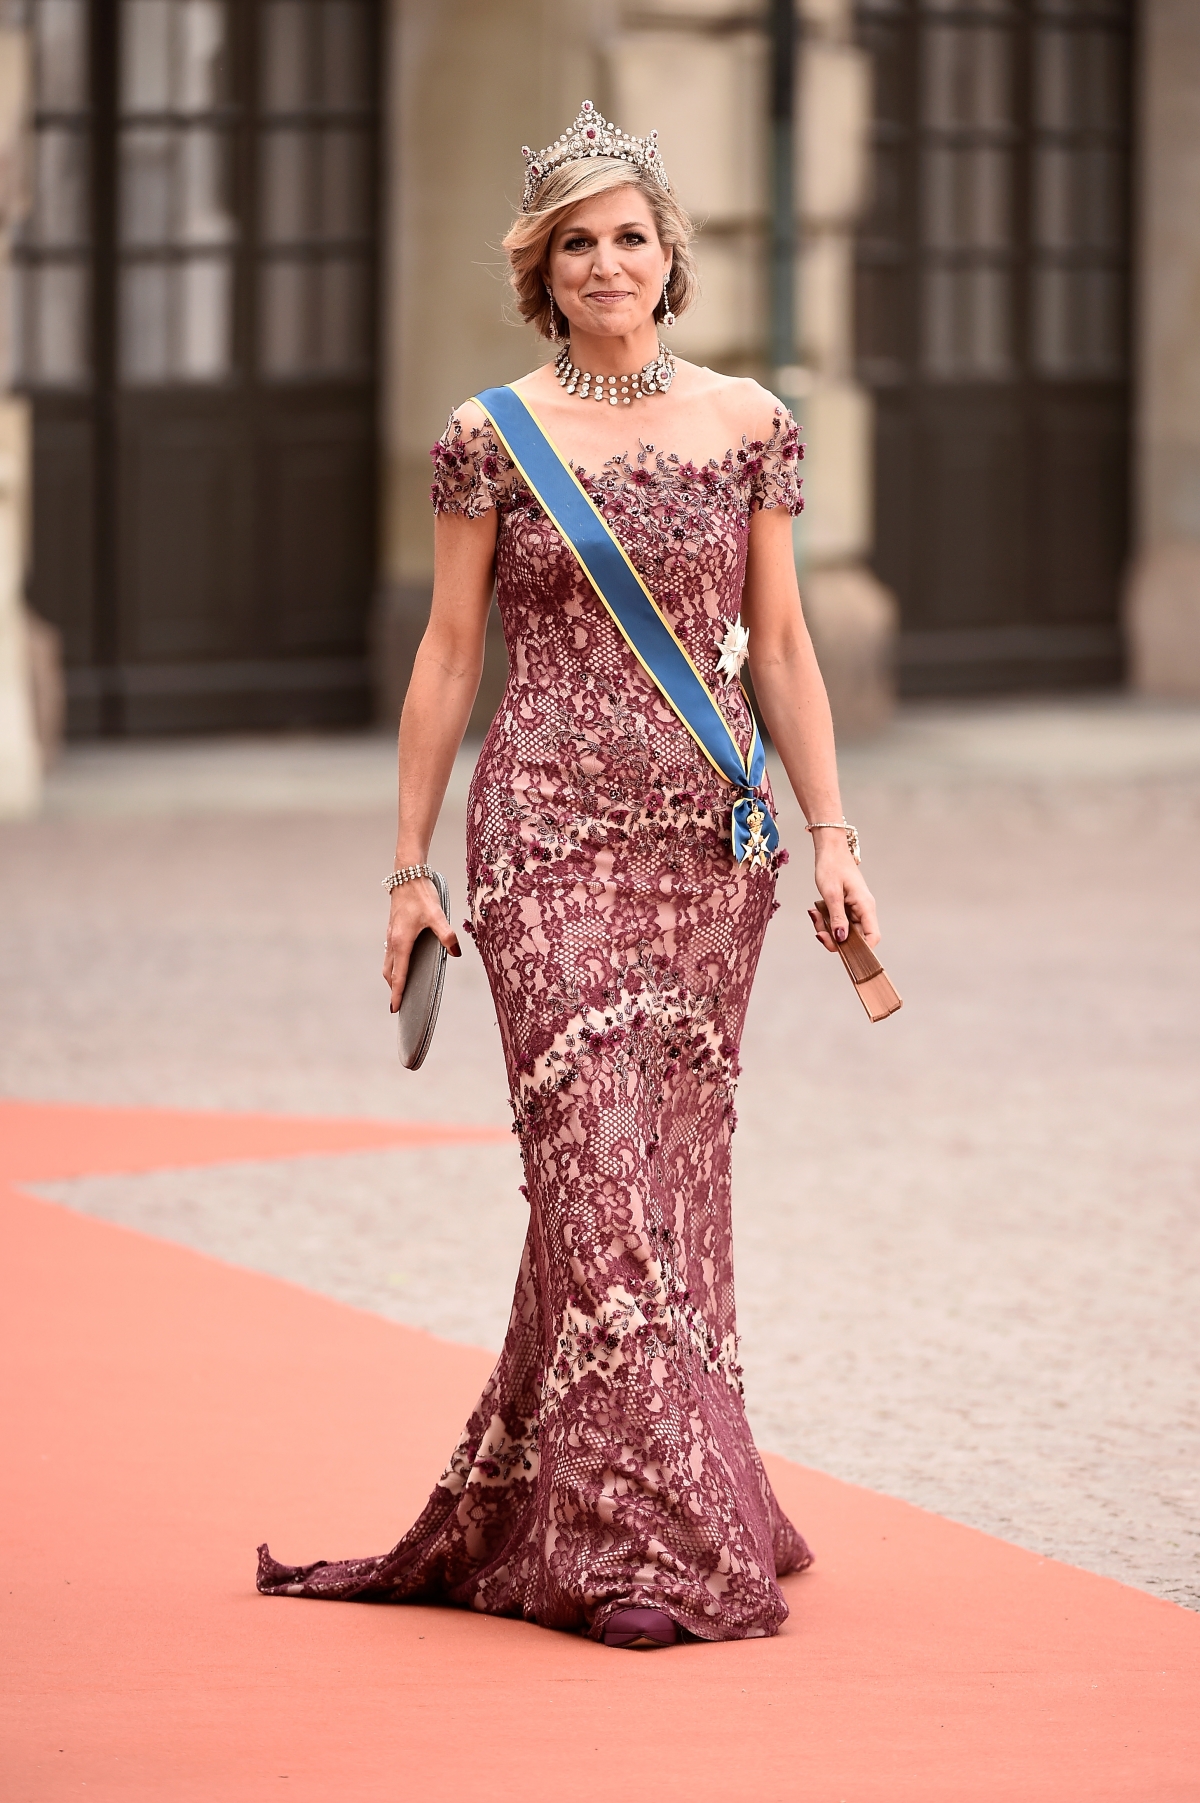 Queen Maximas style in 2015